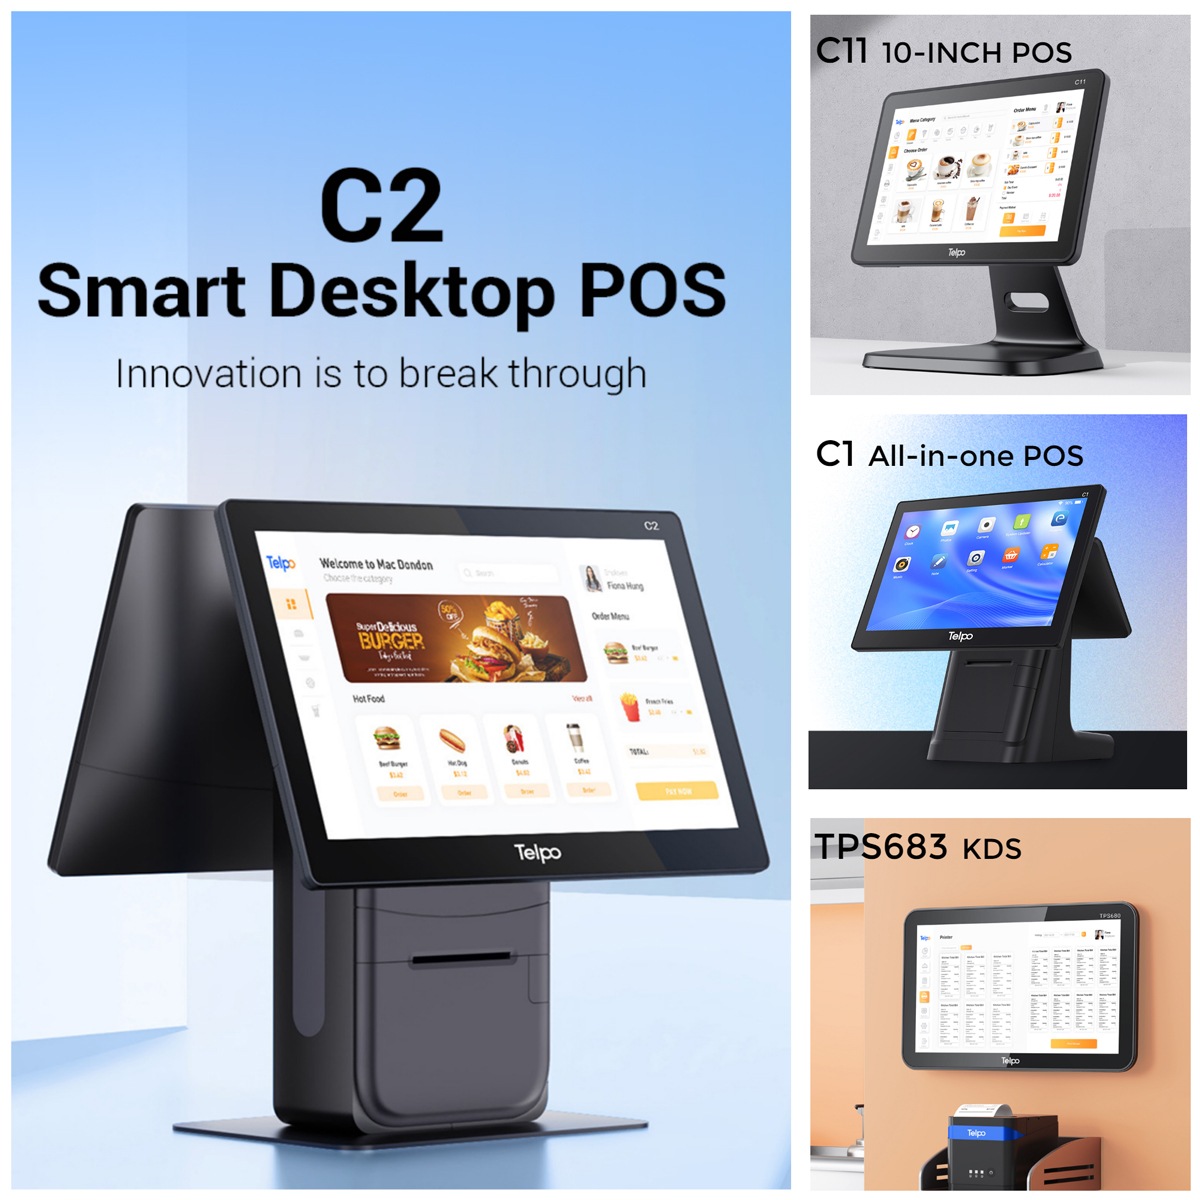 Smart desktop POS